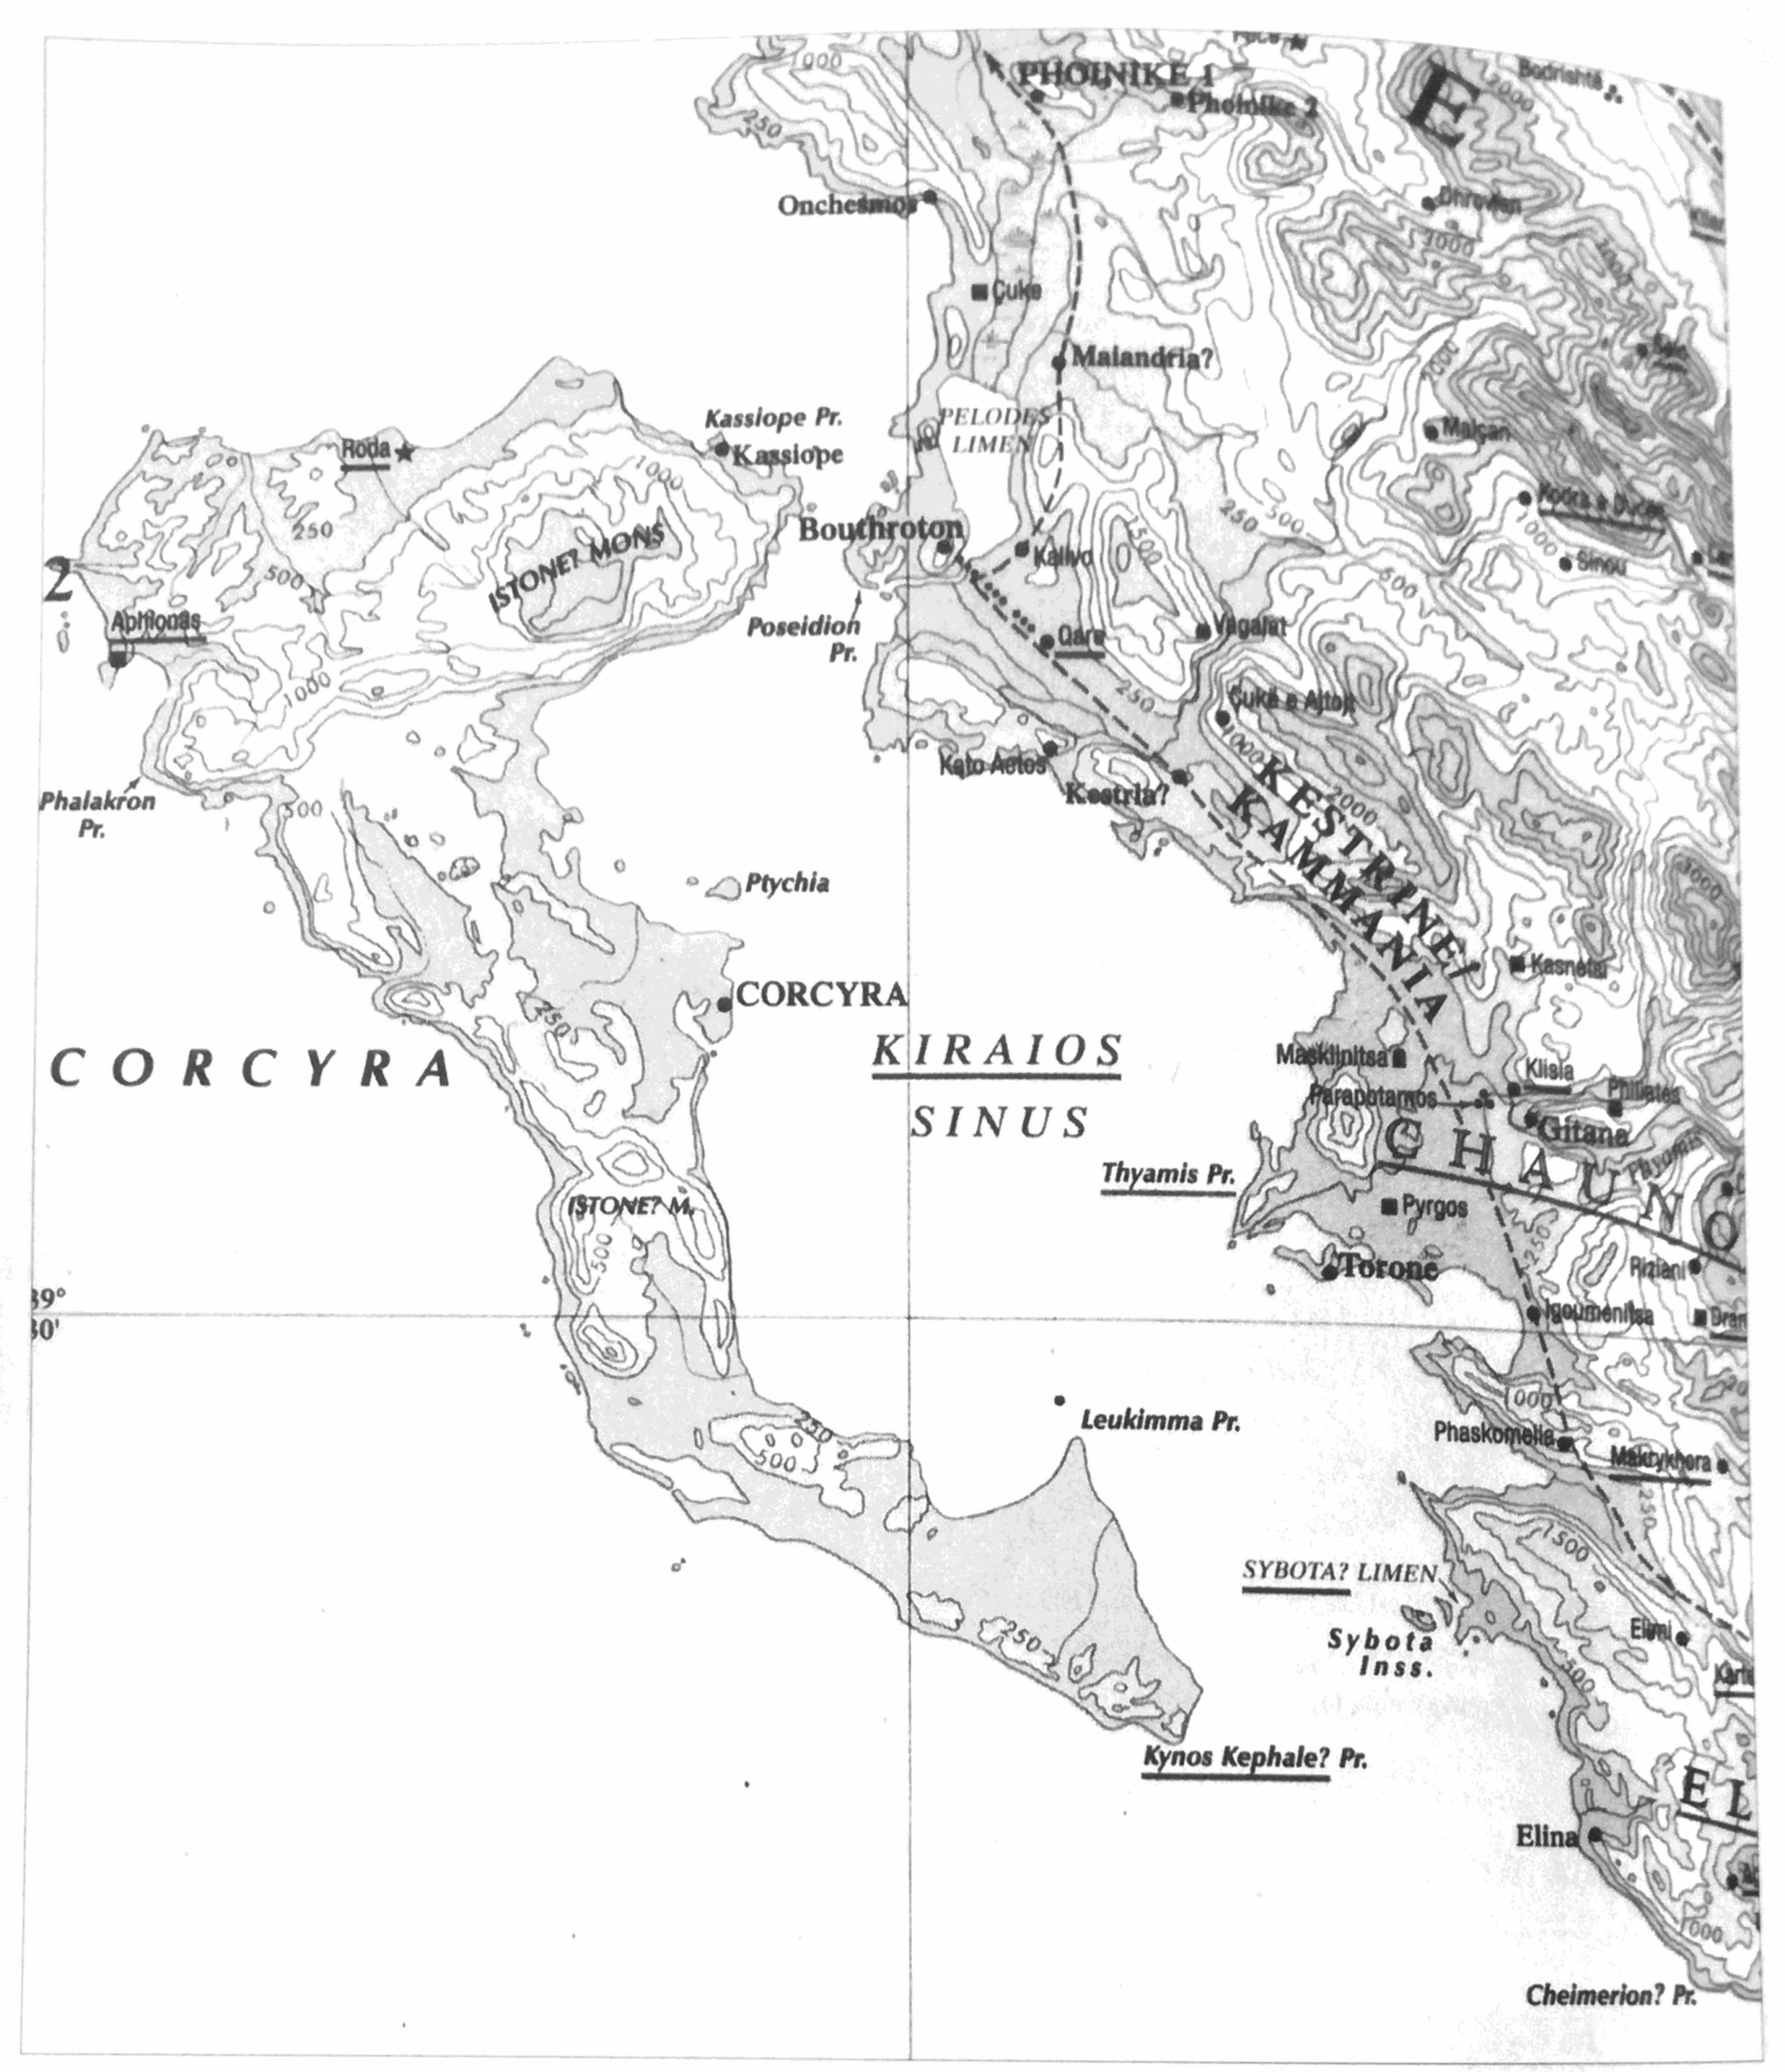  Figure 1. Corcyra and the Epirote coast (Carusi 2011) 